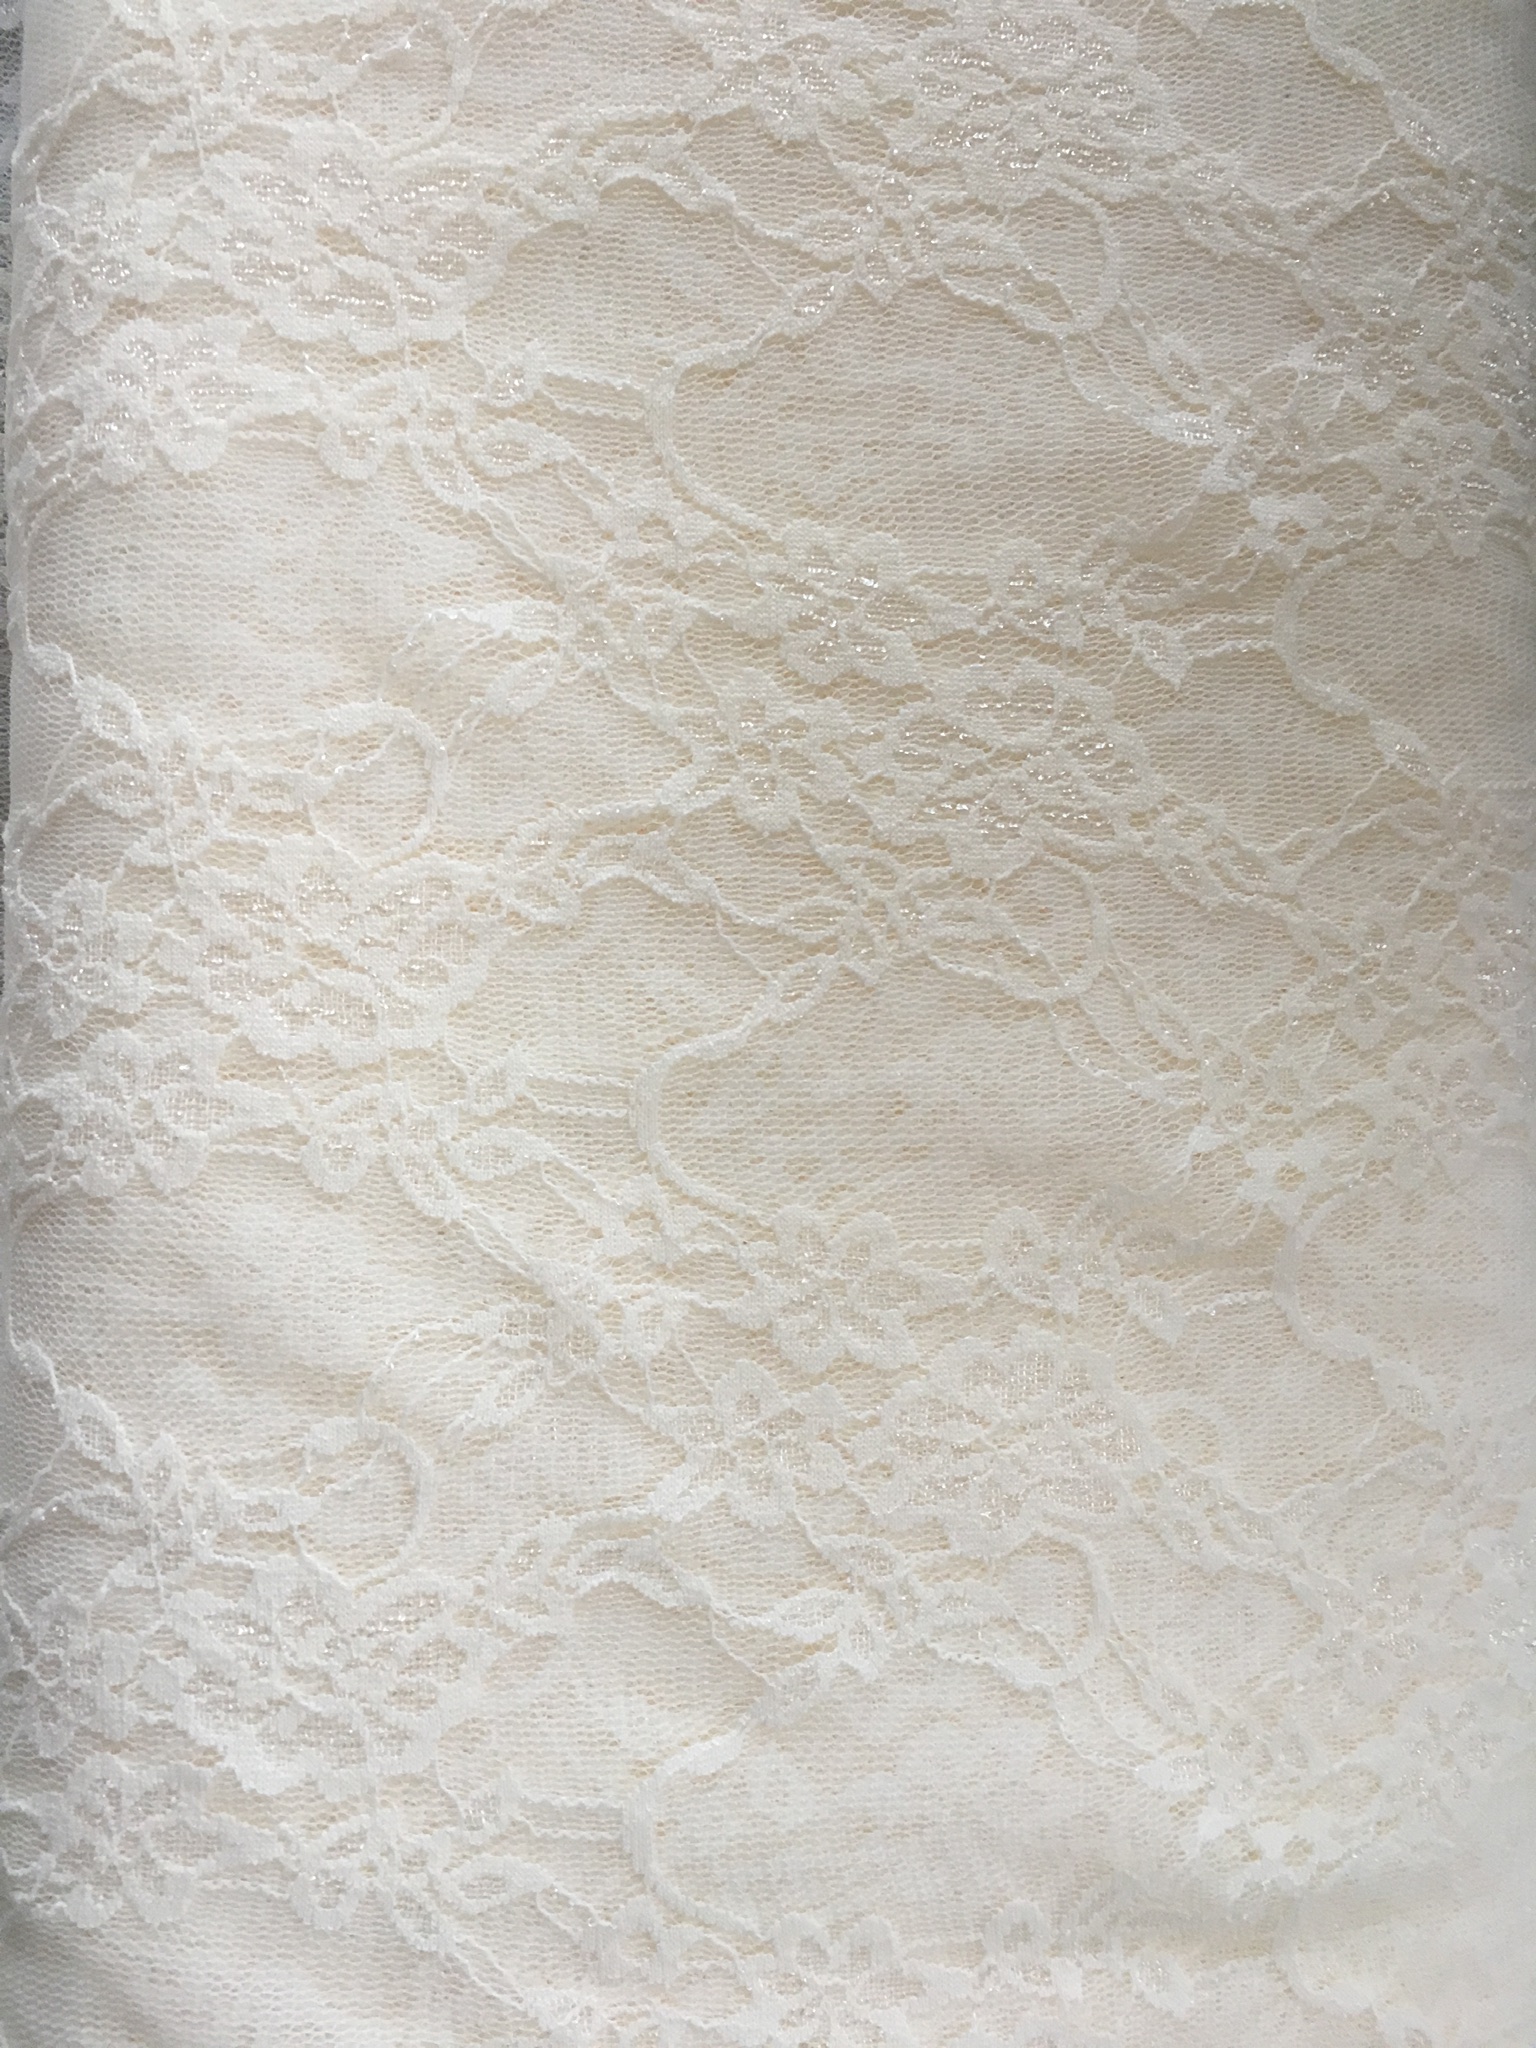 Stretch Lace-Ivory - Sew Pretty Fabric